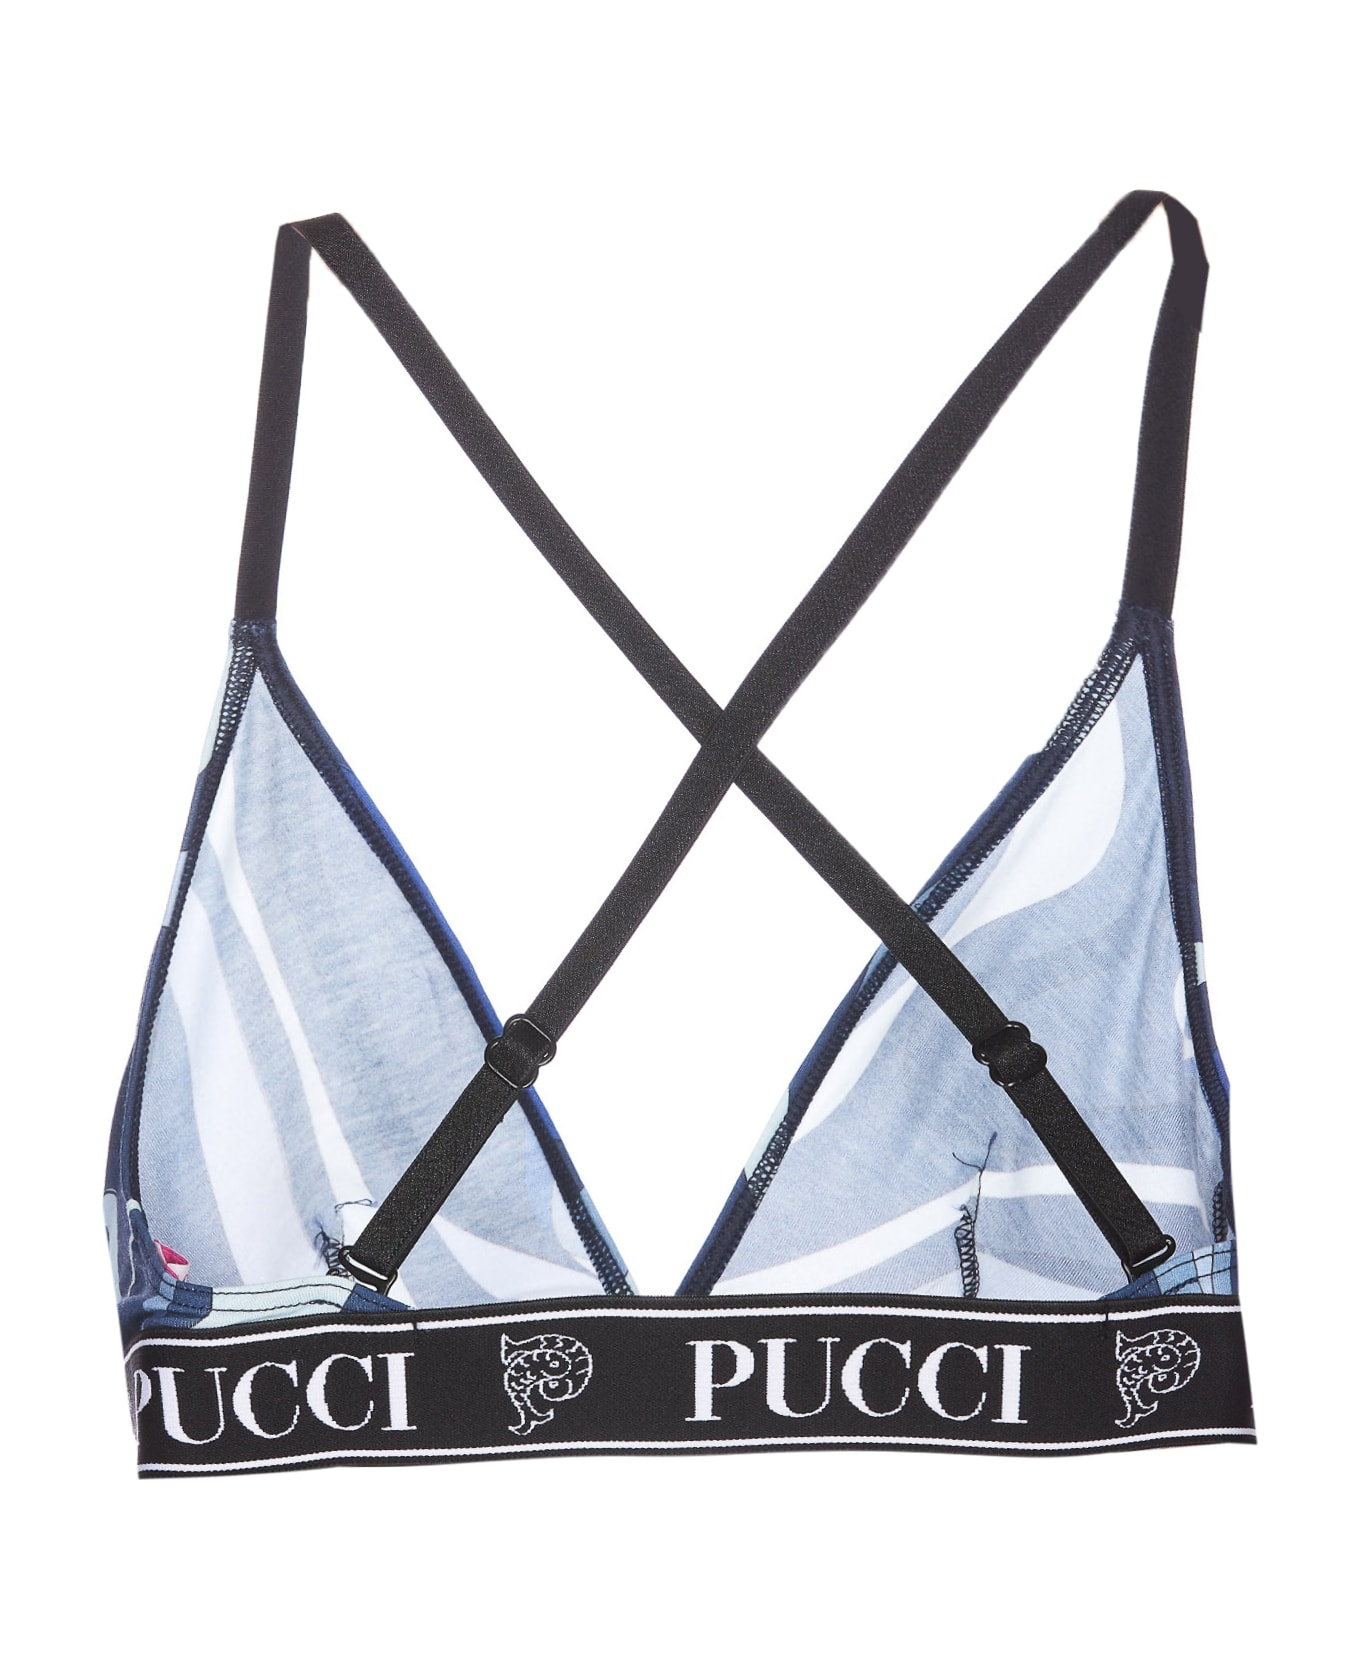 Pucci 3pack Bra - Blue ブラジャー